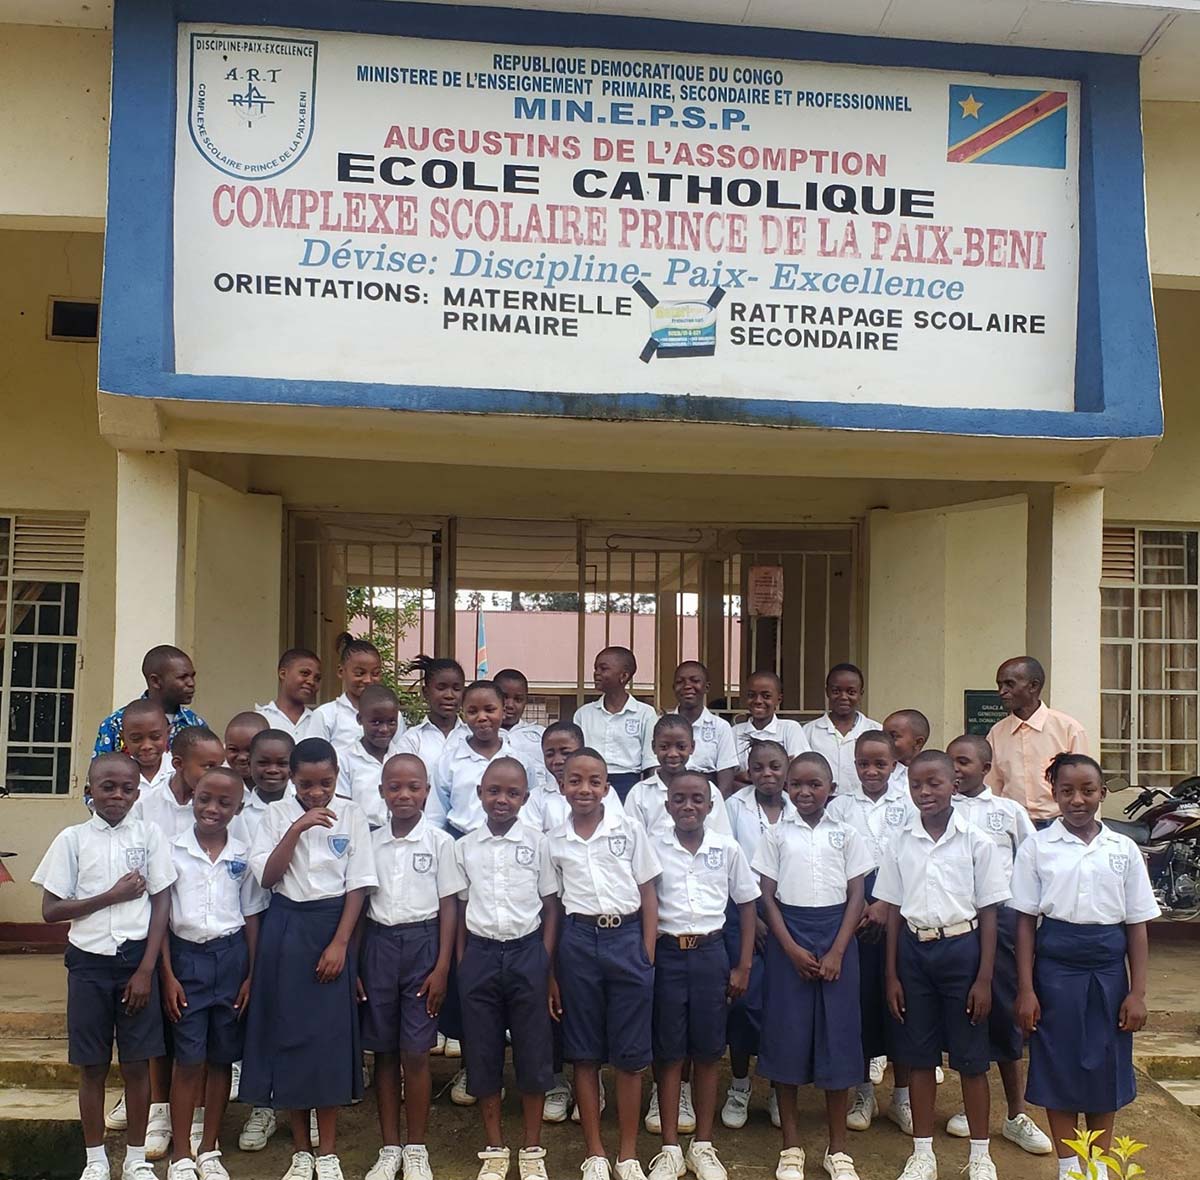 Assumptionists School in Beni, D.R. Congo - Prince de la Paix